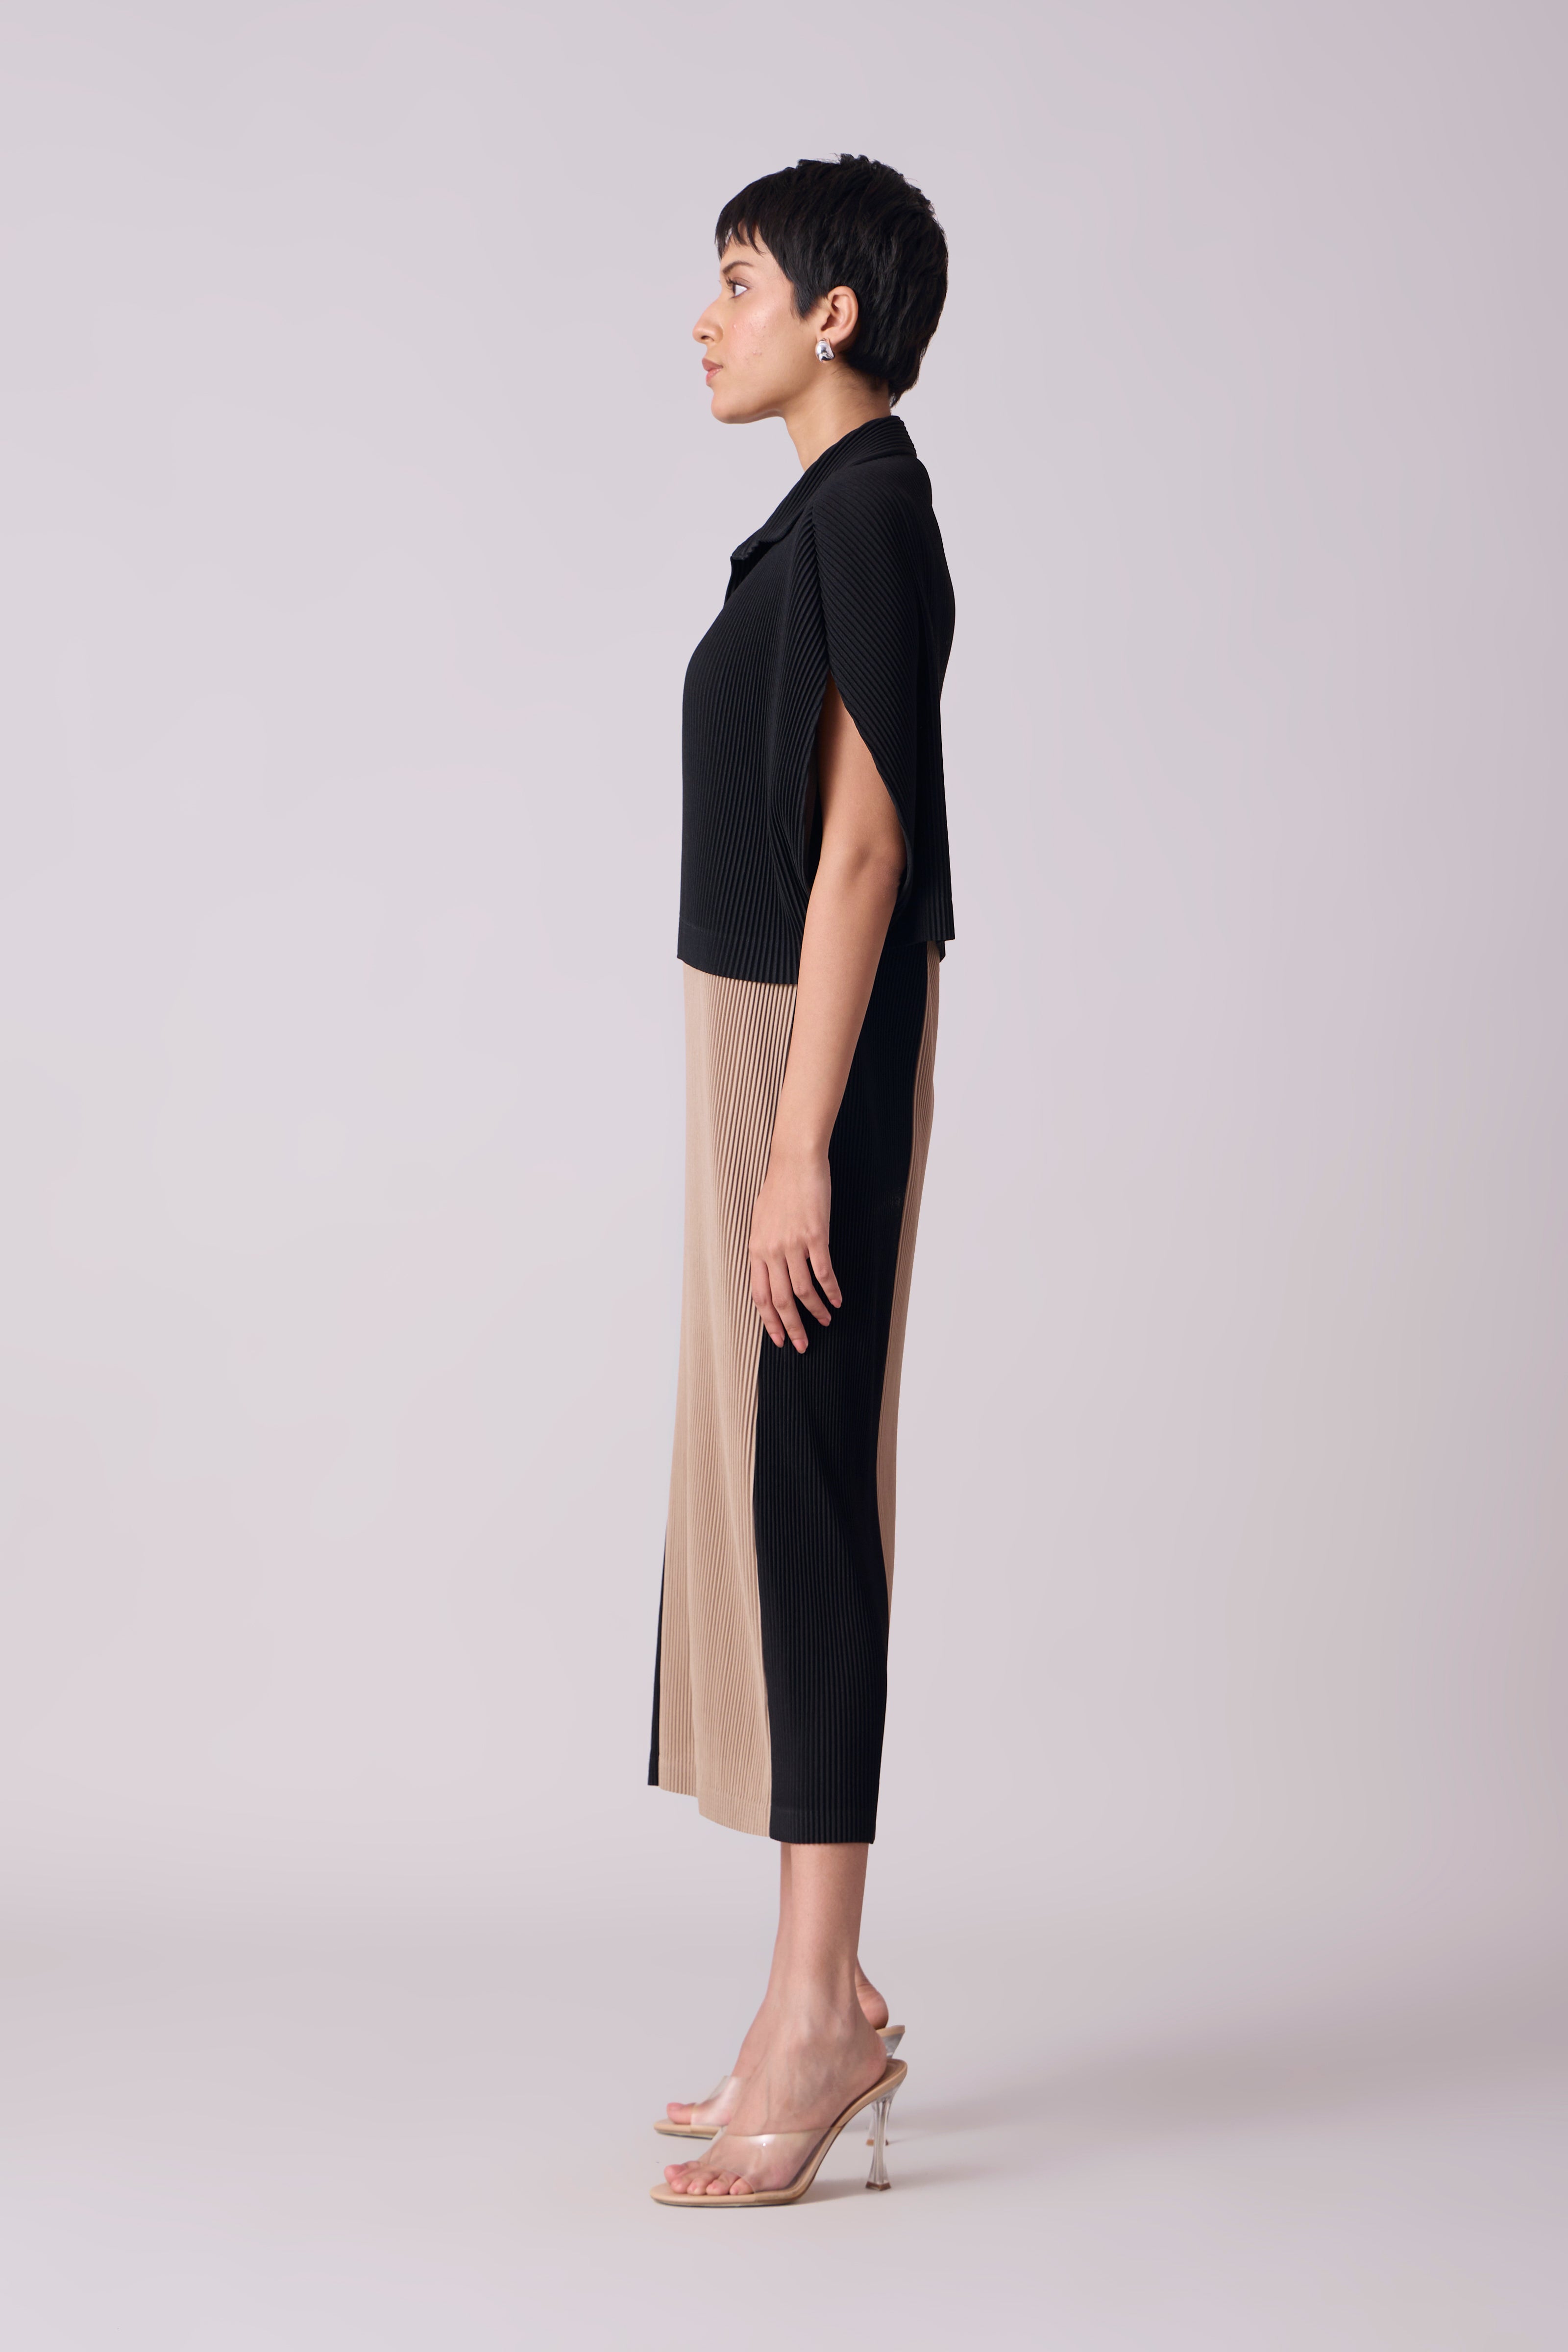 Josie Dual Colour Dress - Black & Beige